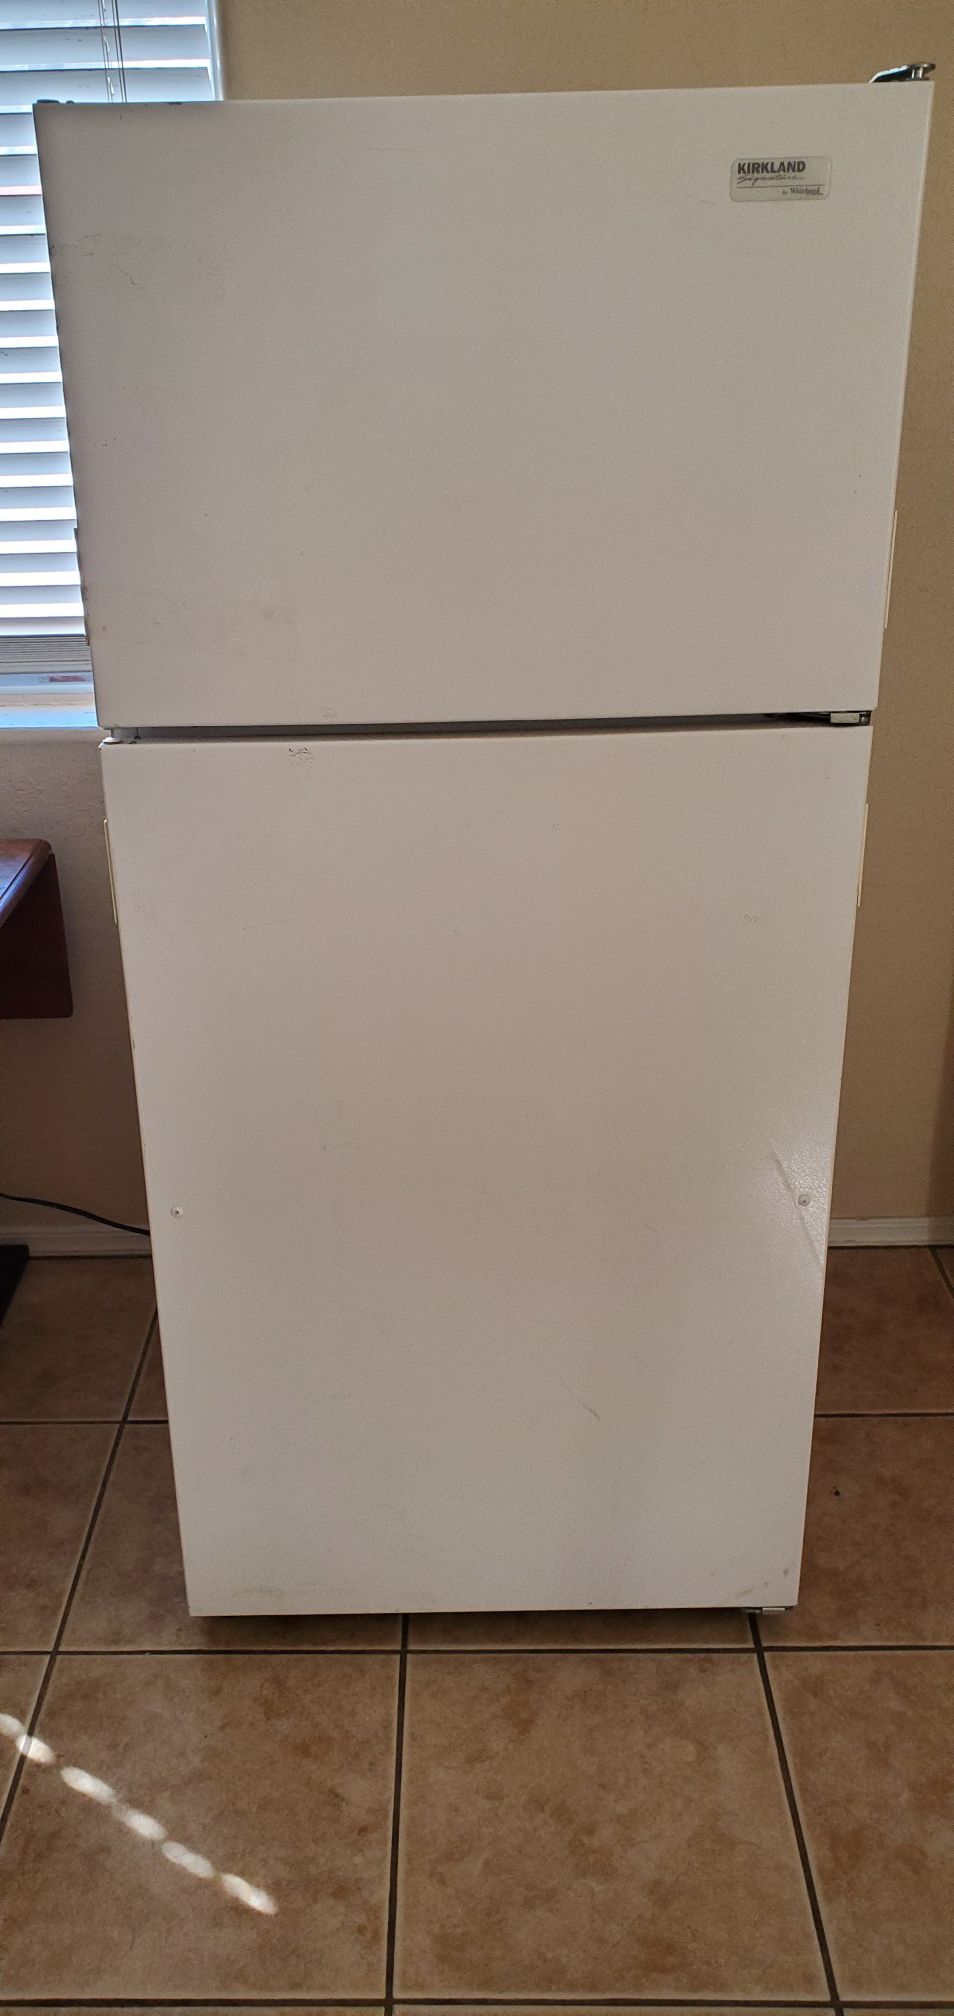 Refrigerator freezer fridge garage fridge beer fridge storage fridge Kirkland signature by whirlpool priced to sell